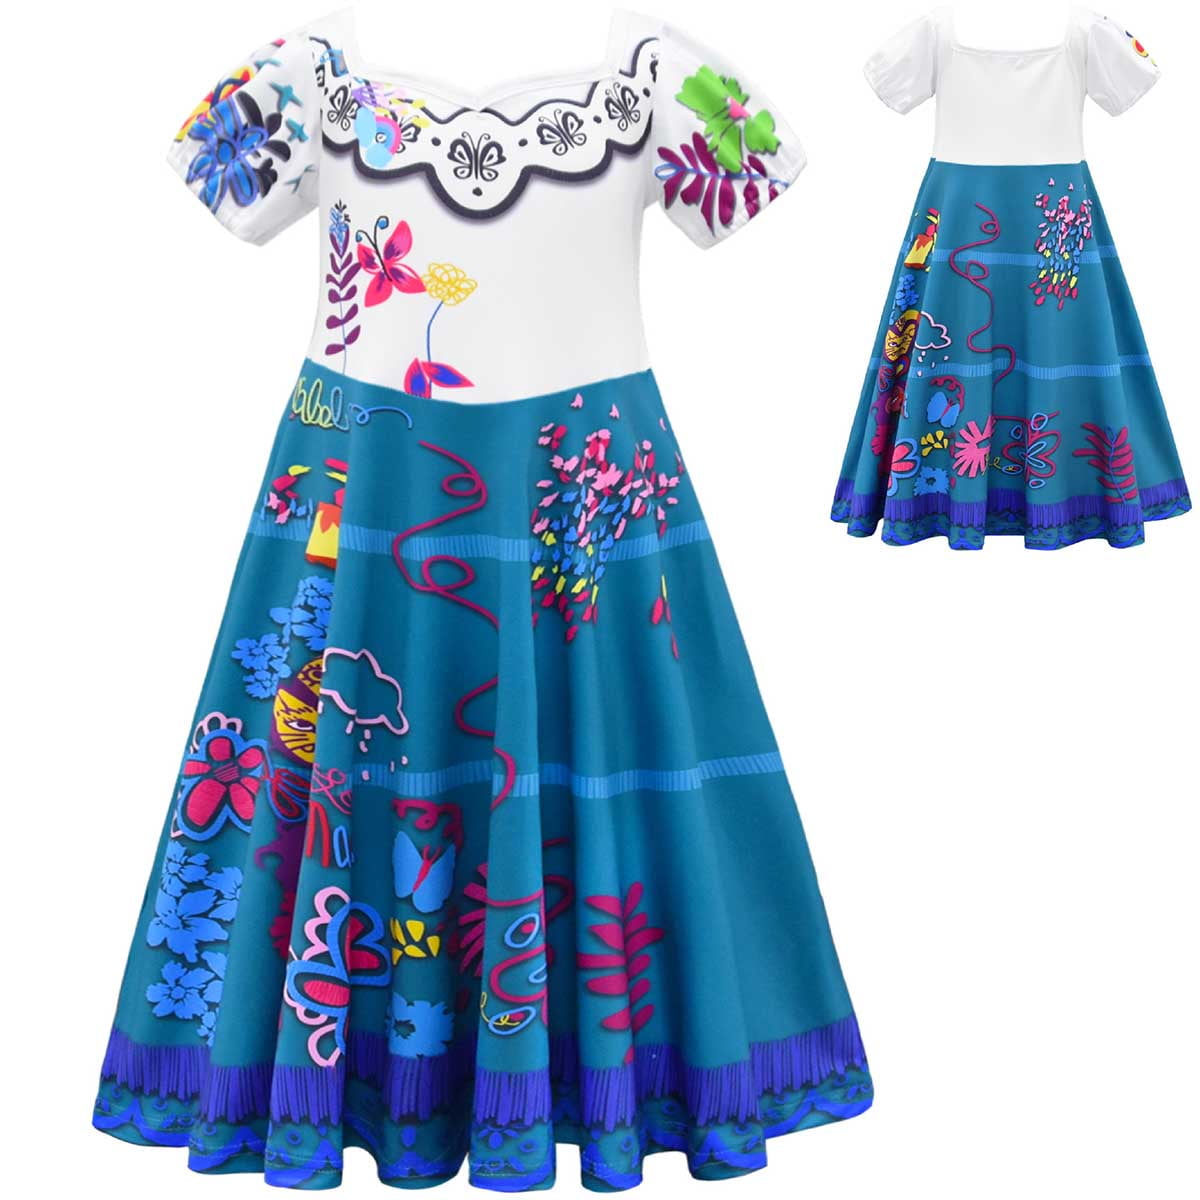 Girls flower fairy costume dress pattern sz 3-8 